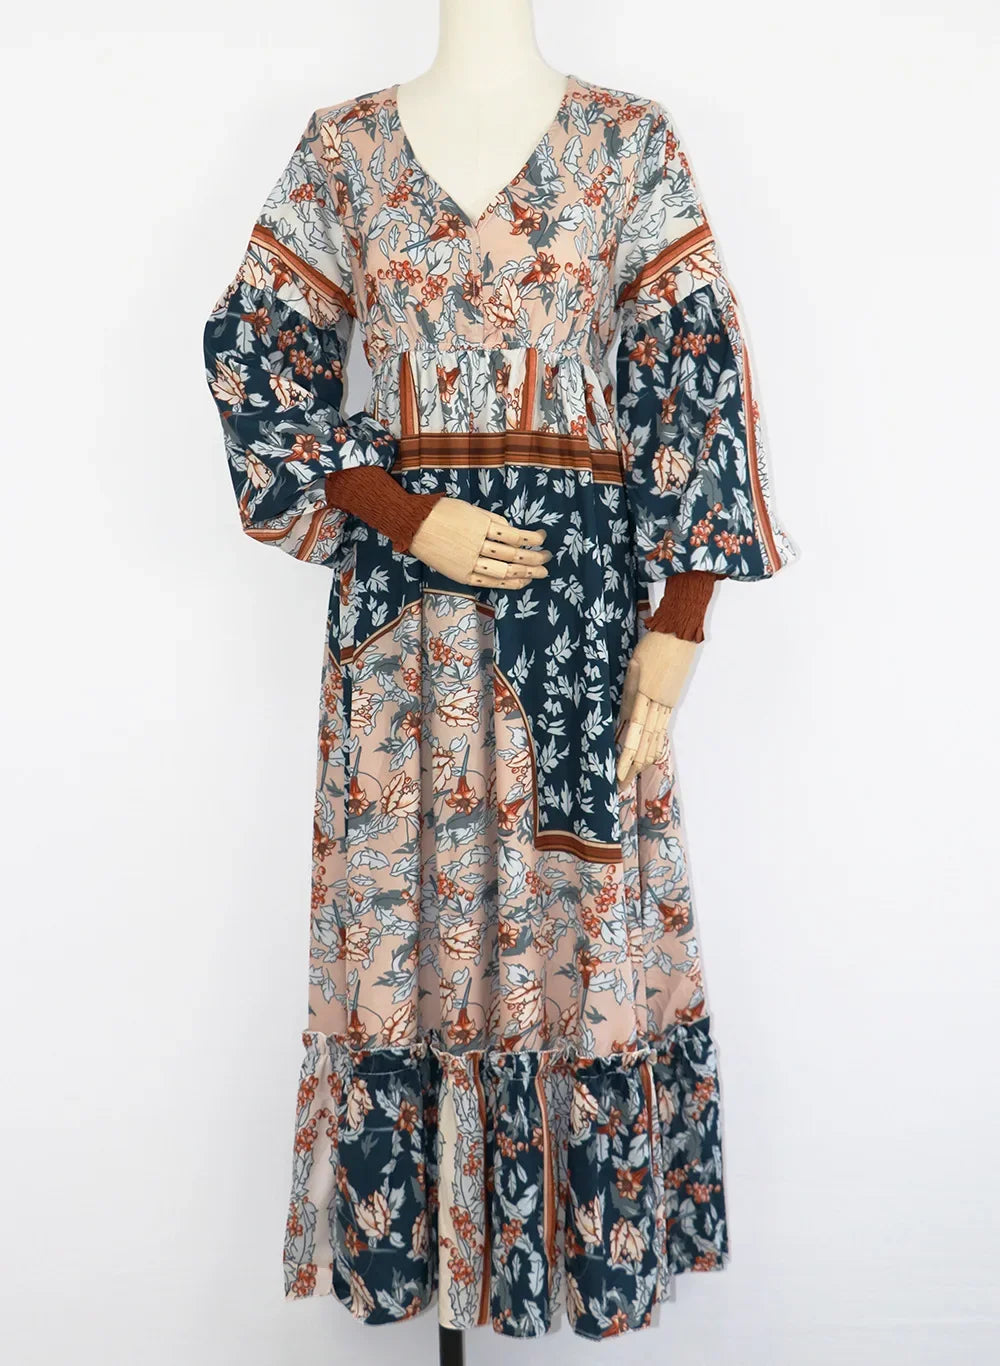 Bohemian Vintage Maxi Dress Ethnic Chiffon Runway Robes Floral Irregular Hippie Vestidos by Canmol.